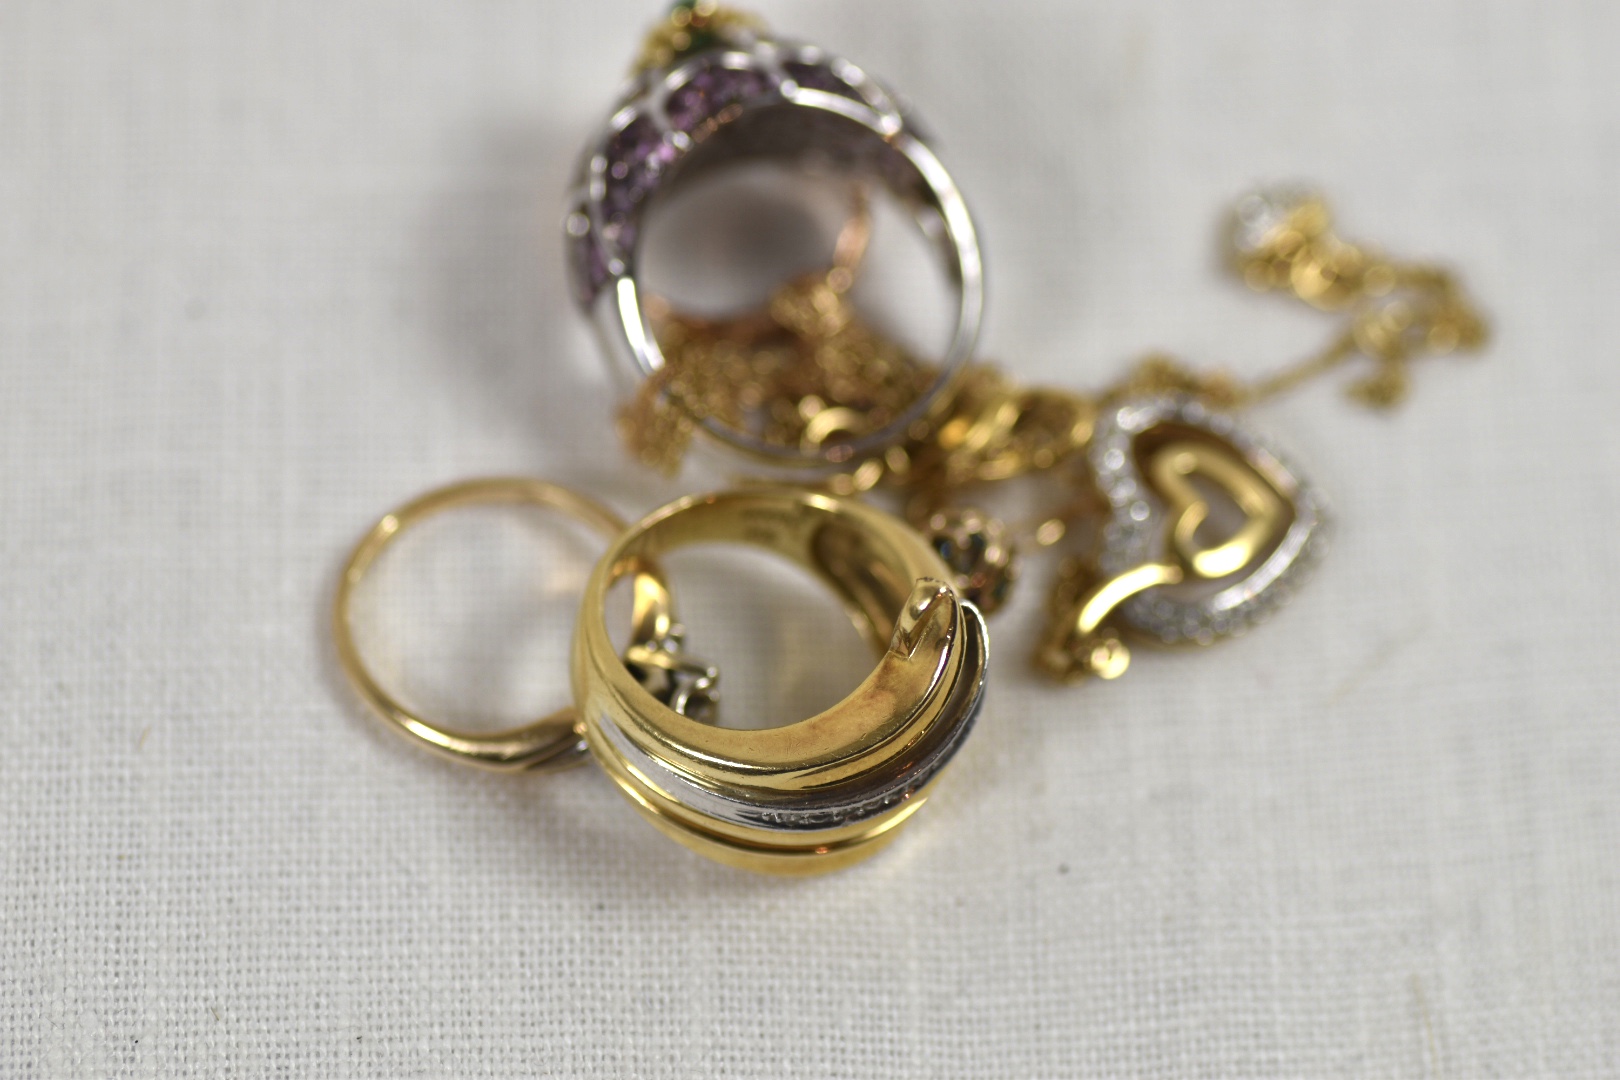 K18、Pt850の指輪とネックレスを狭山市のお客様からお買取させていただきました！価格相場はどのくらい？